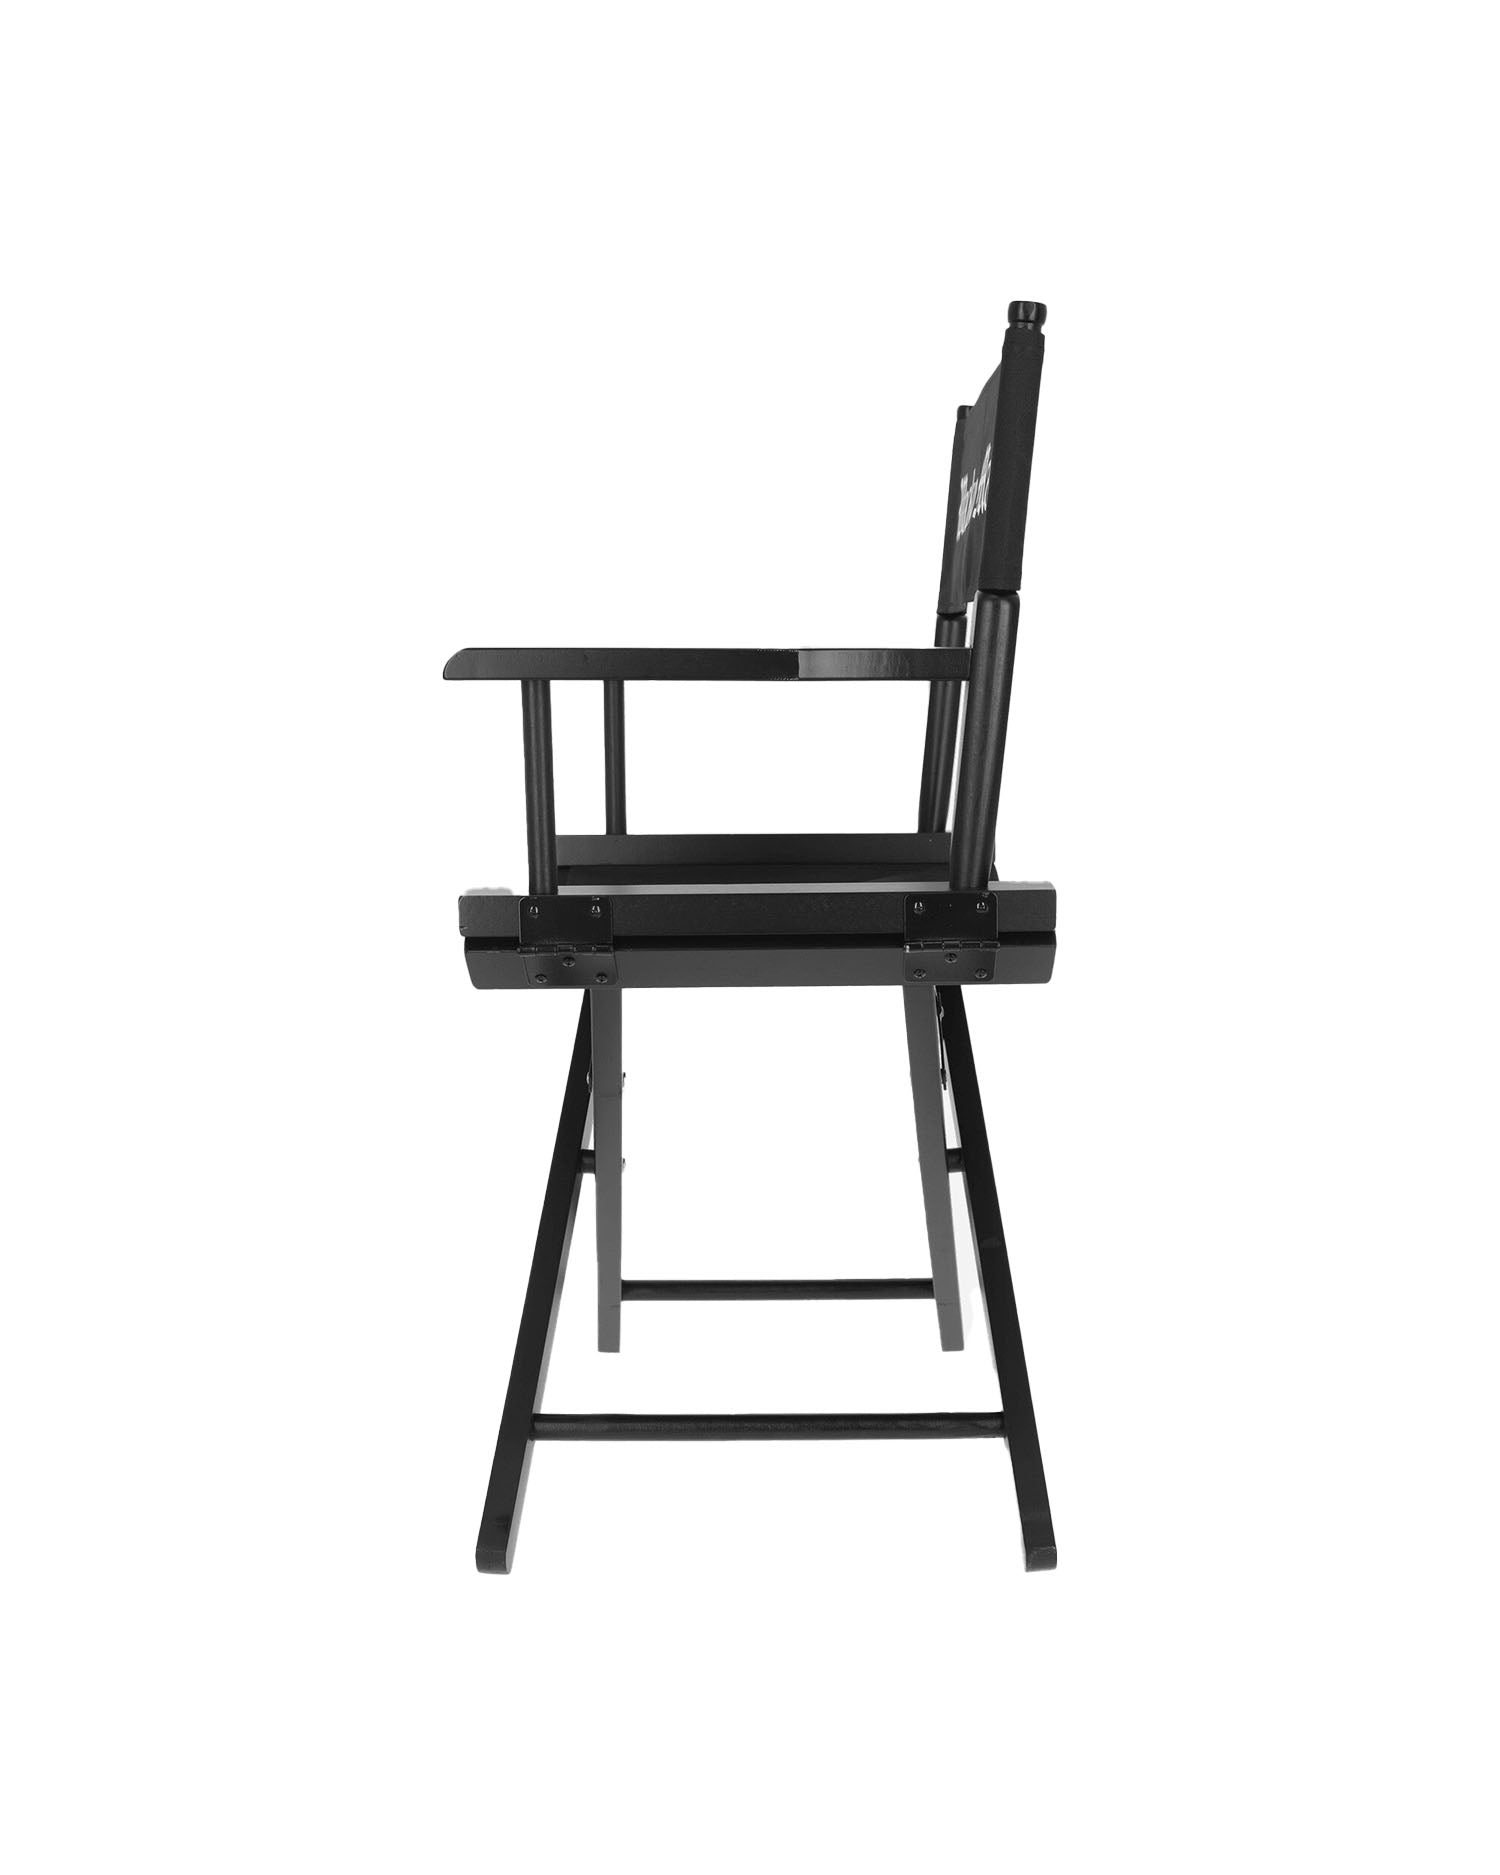 Directors Chair - Black